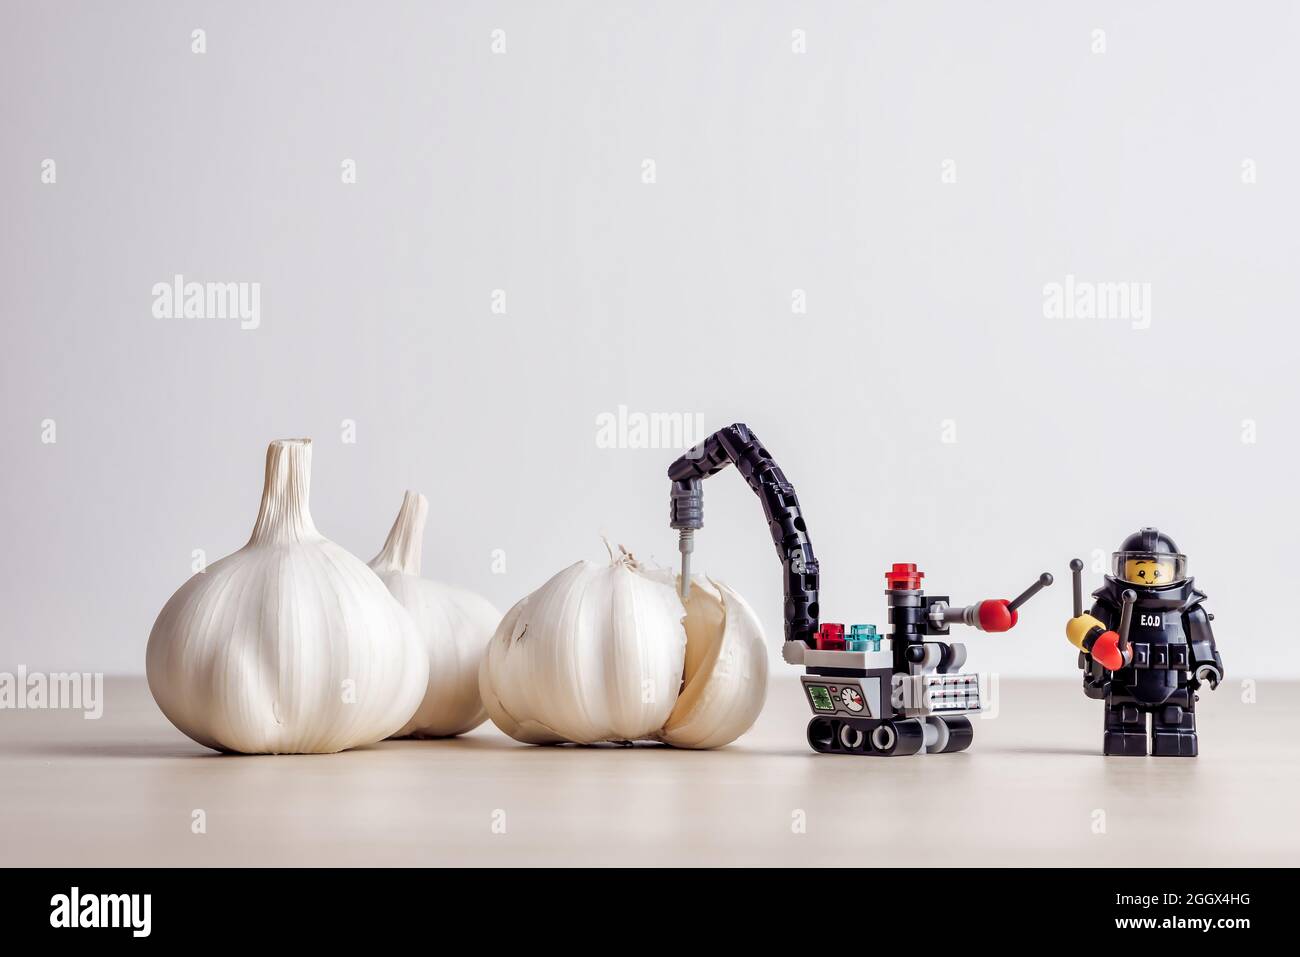 Garlic peeling concept. Illustrative editorial. September 02, 2021 Stock Photo